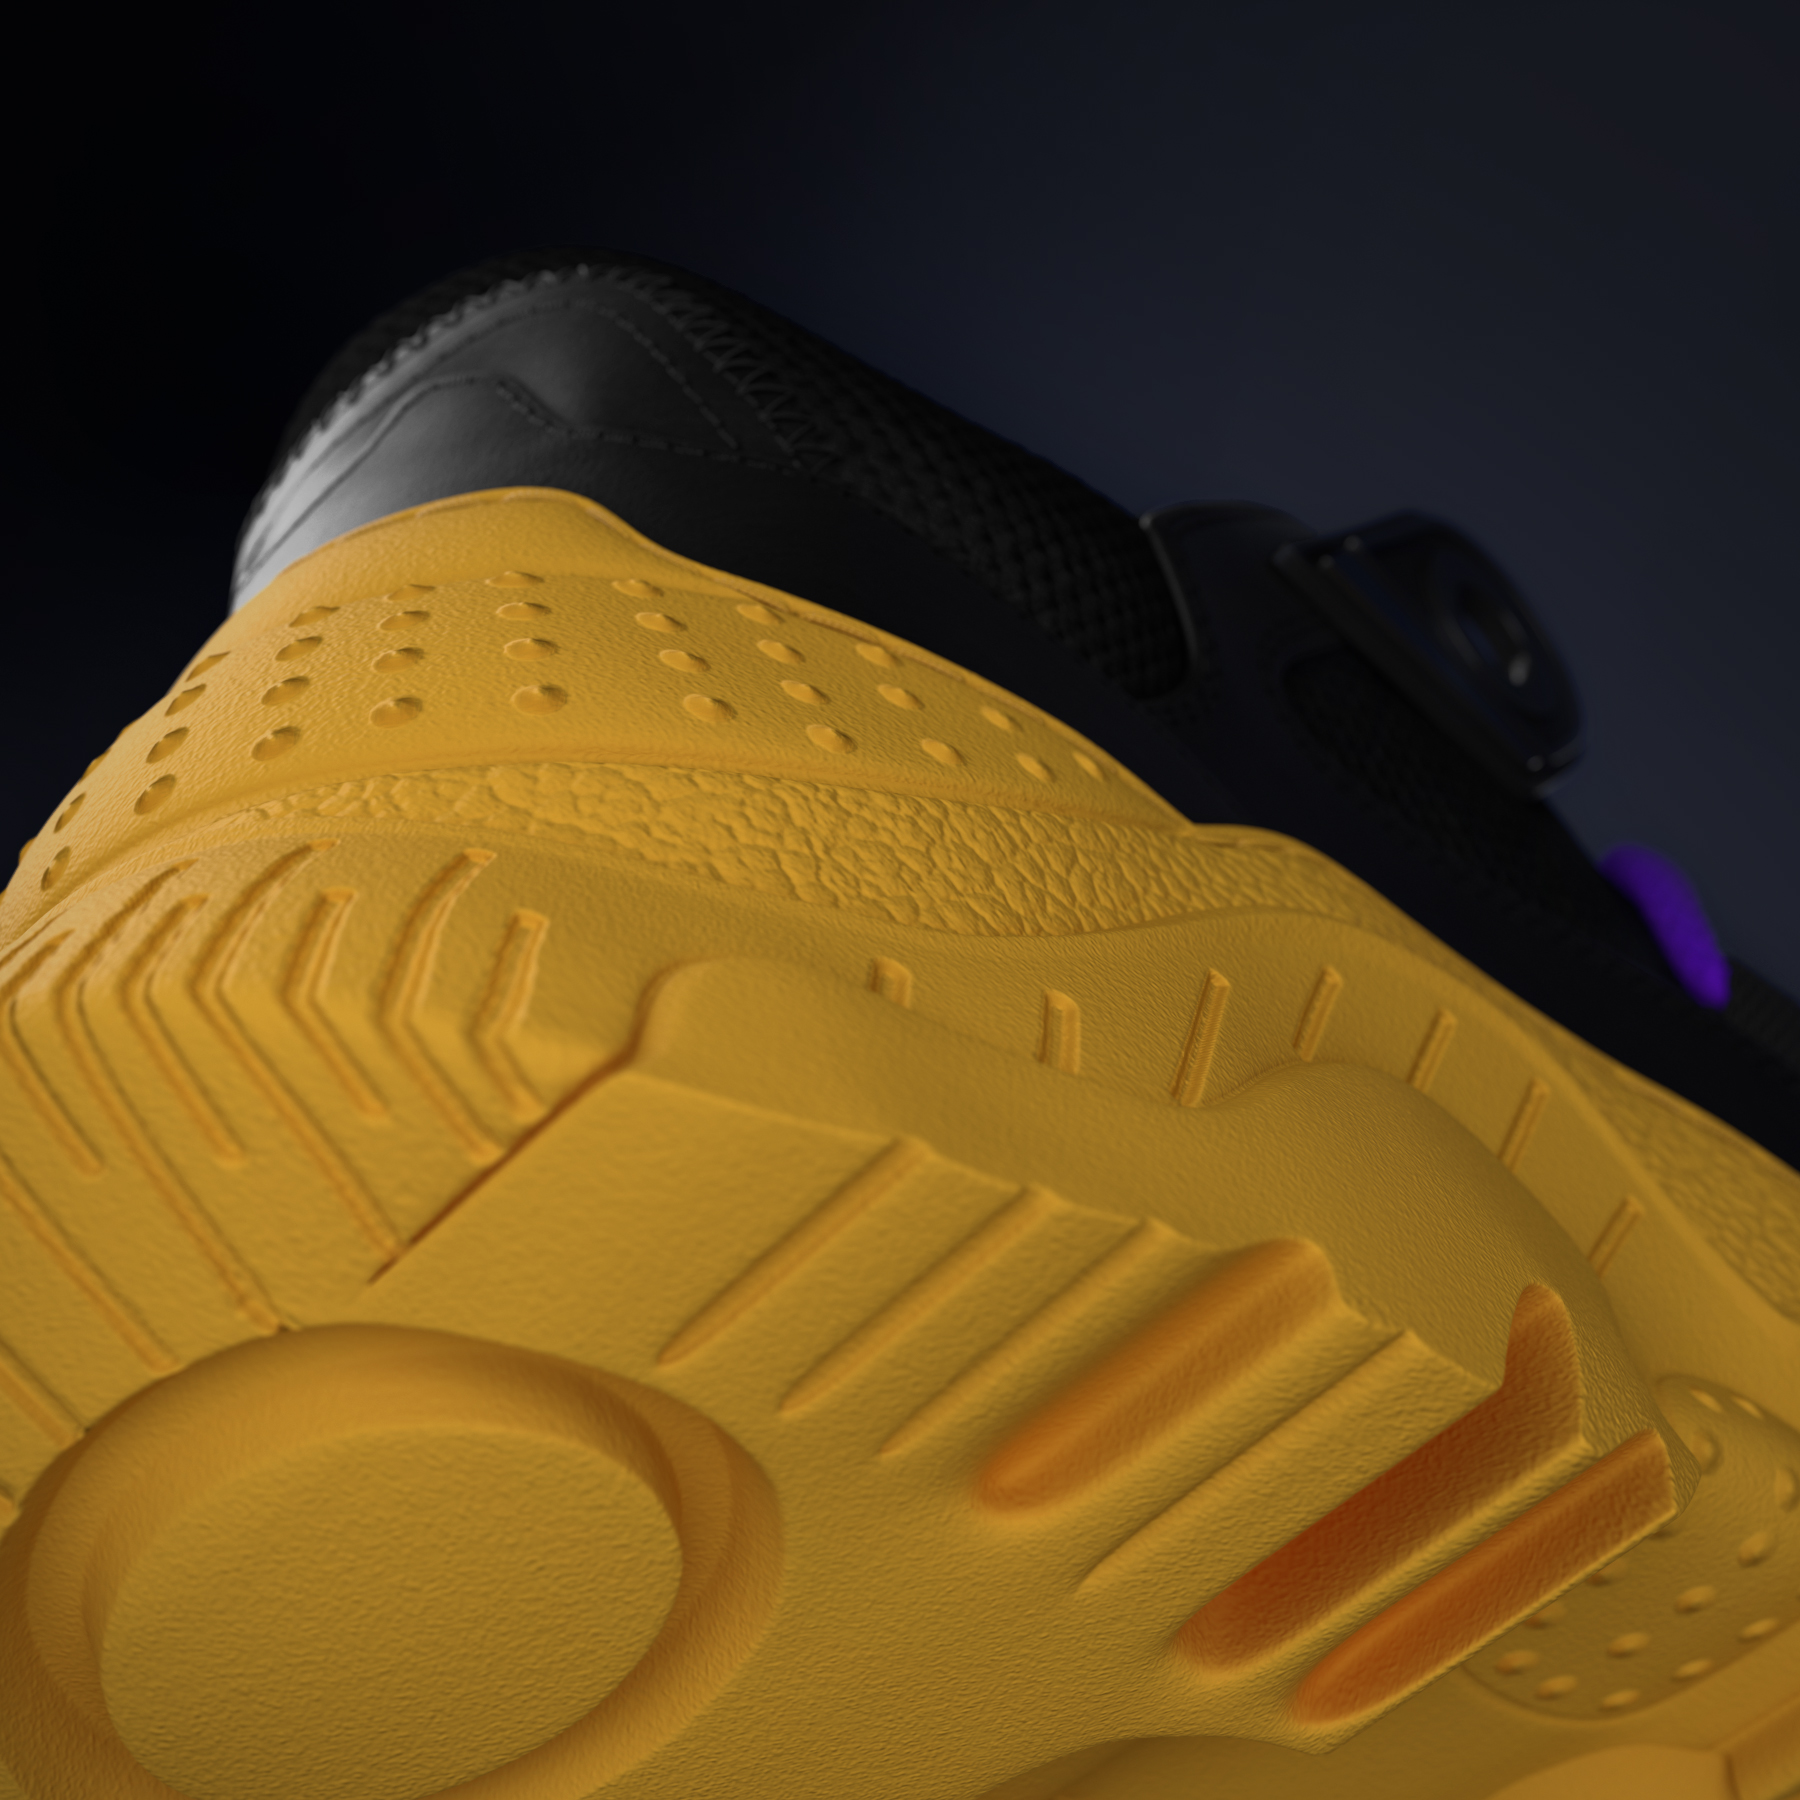 Sneaker's sole detail, down view.